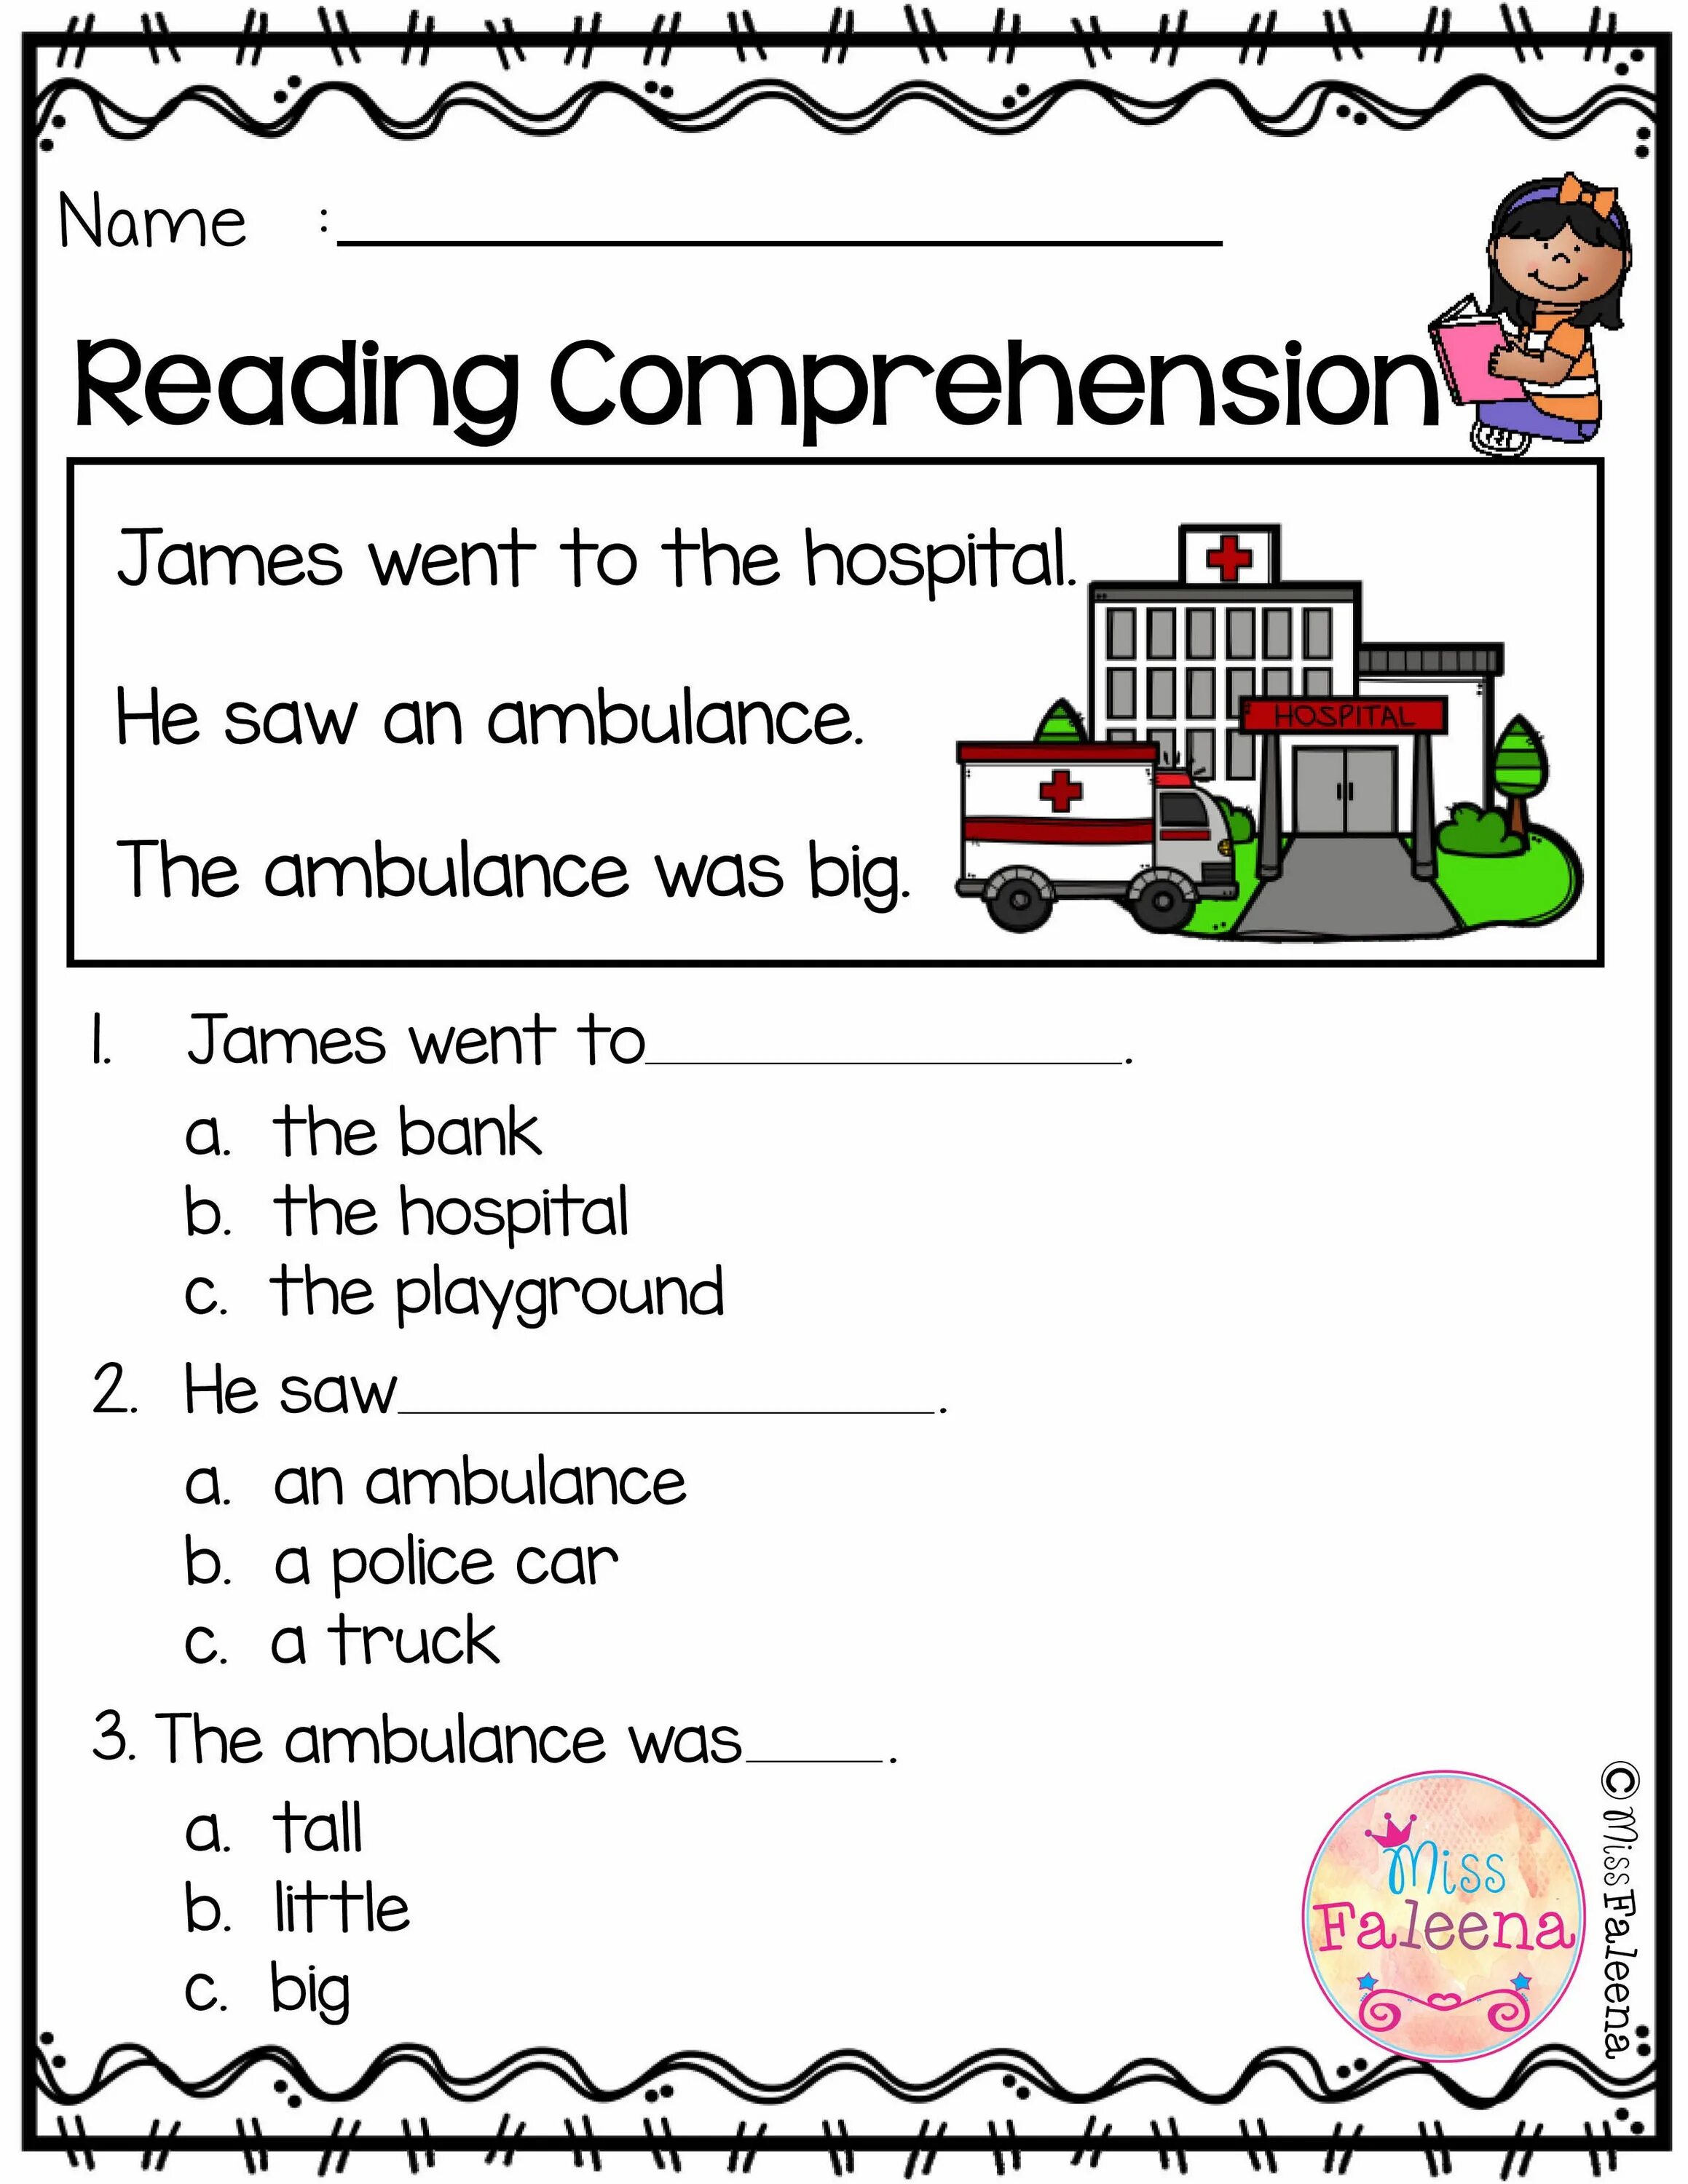 Reading Comprehension. Reading Comprehension for Kids. Reading Comprehension 3 класс. Reading Comprehension for Beginners.